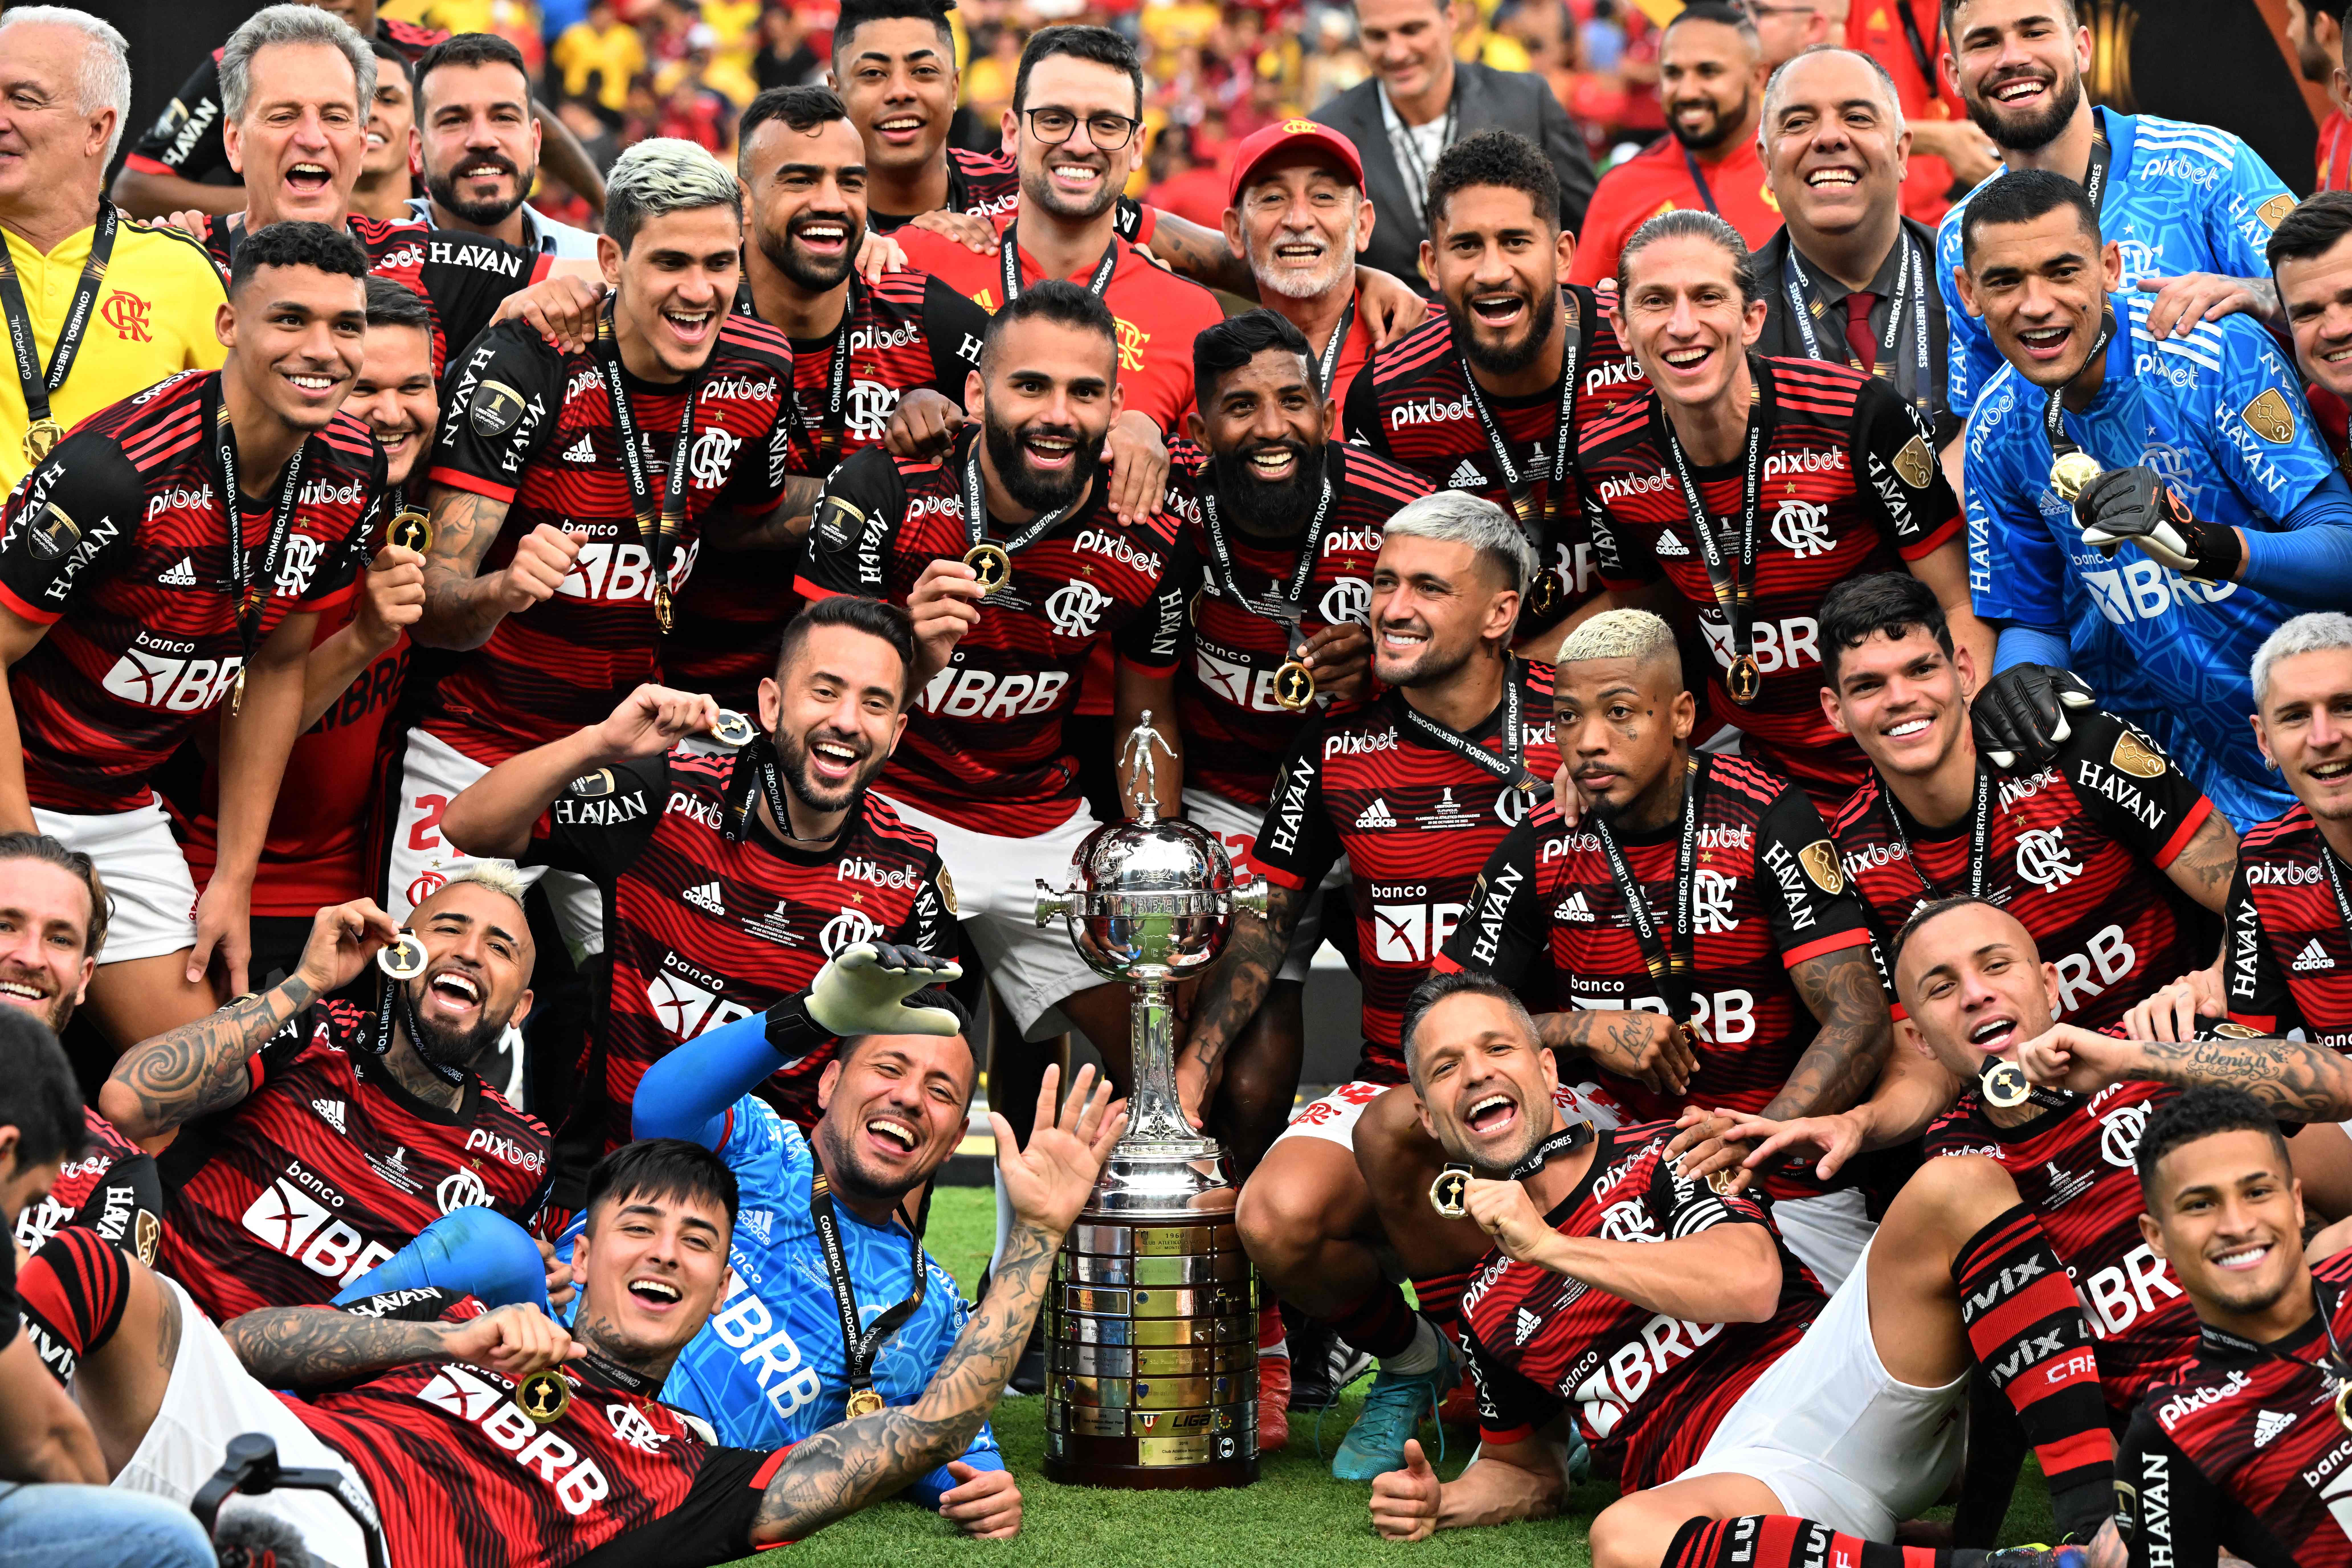 Bonus millonario para Flamengo si gana el Mundial al Real Madrid